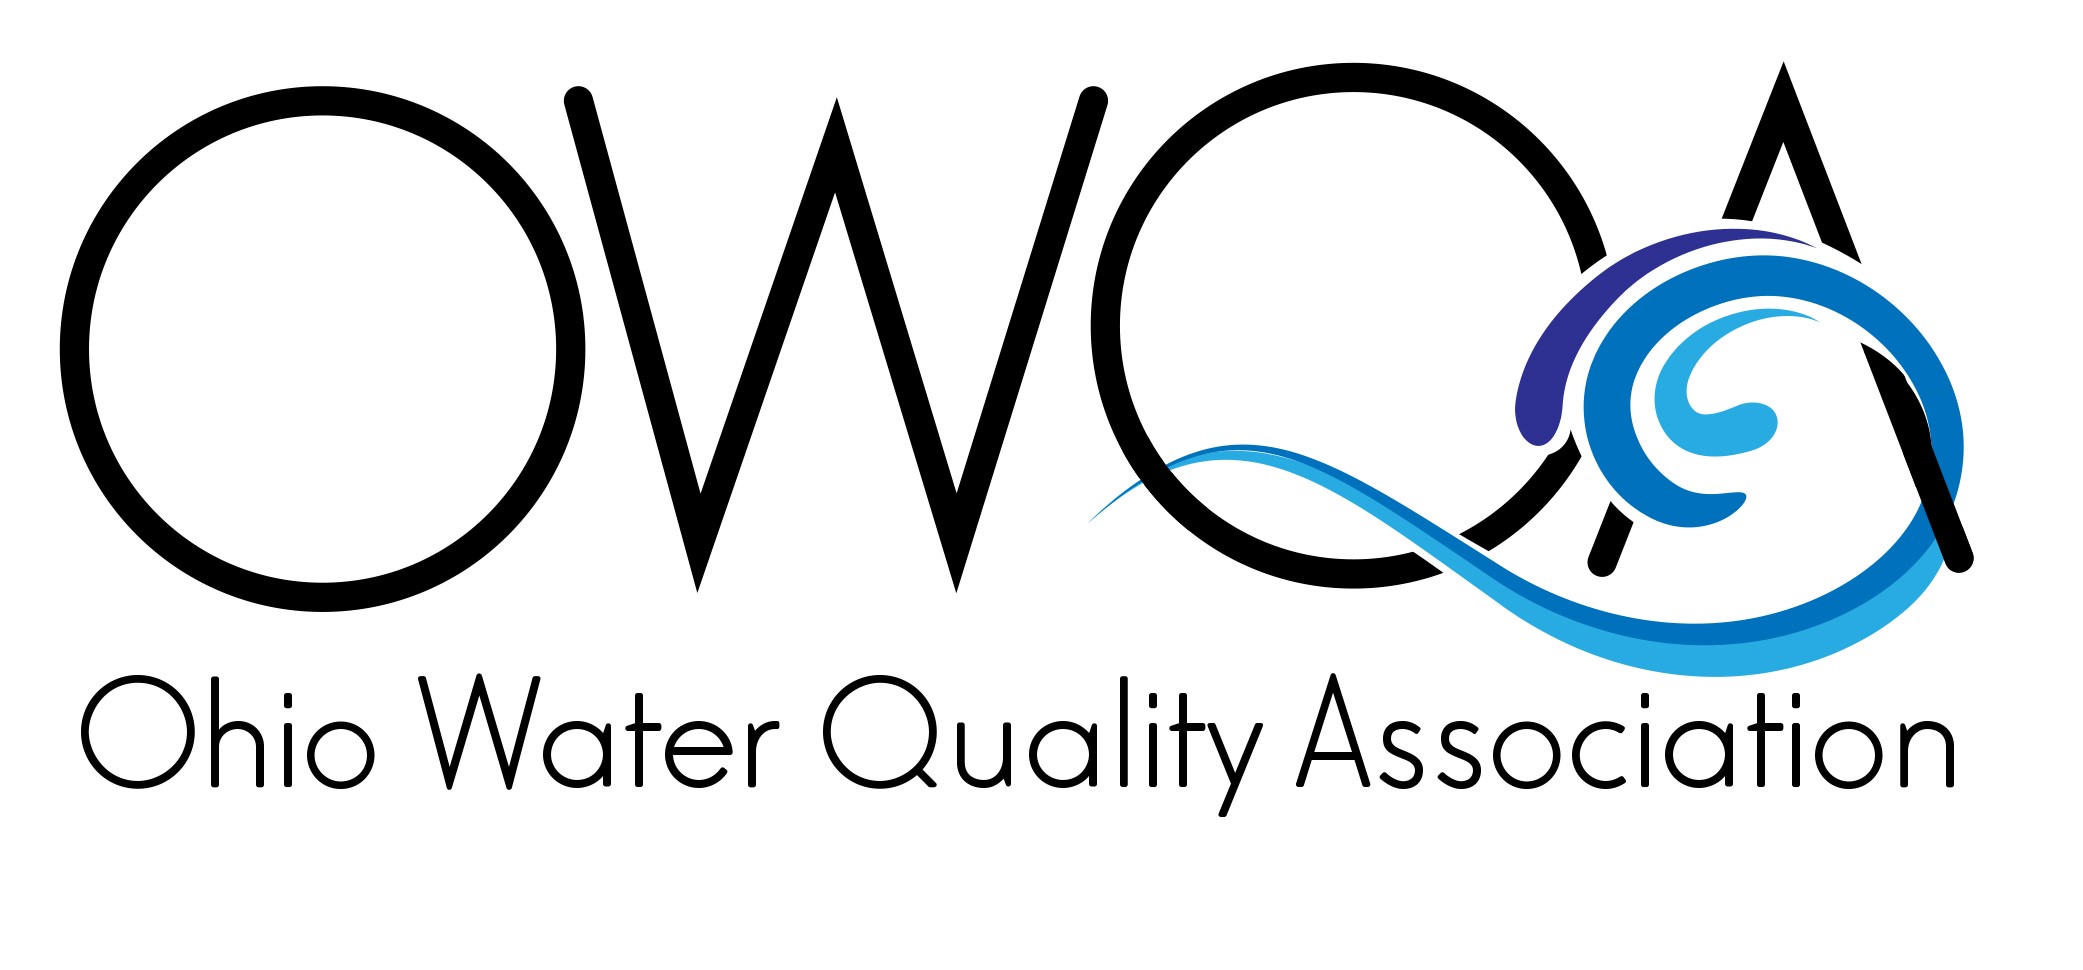 Ohio Water Quality Association Logo